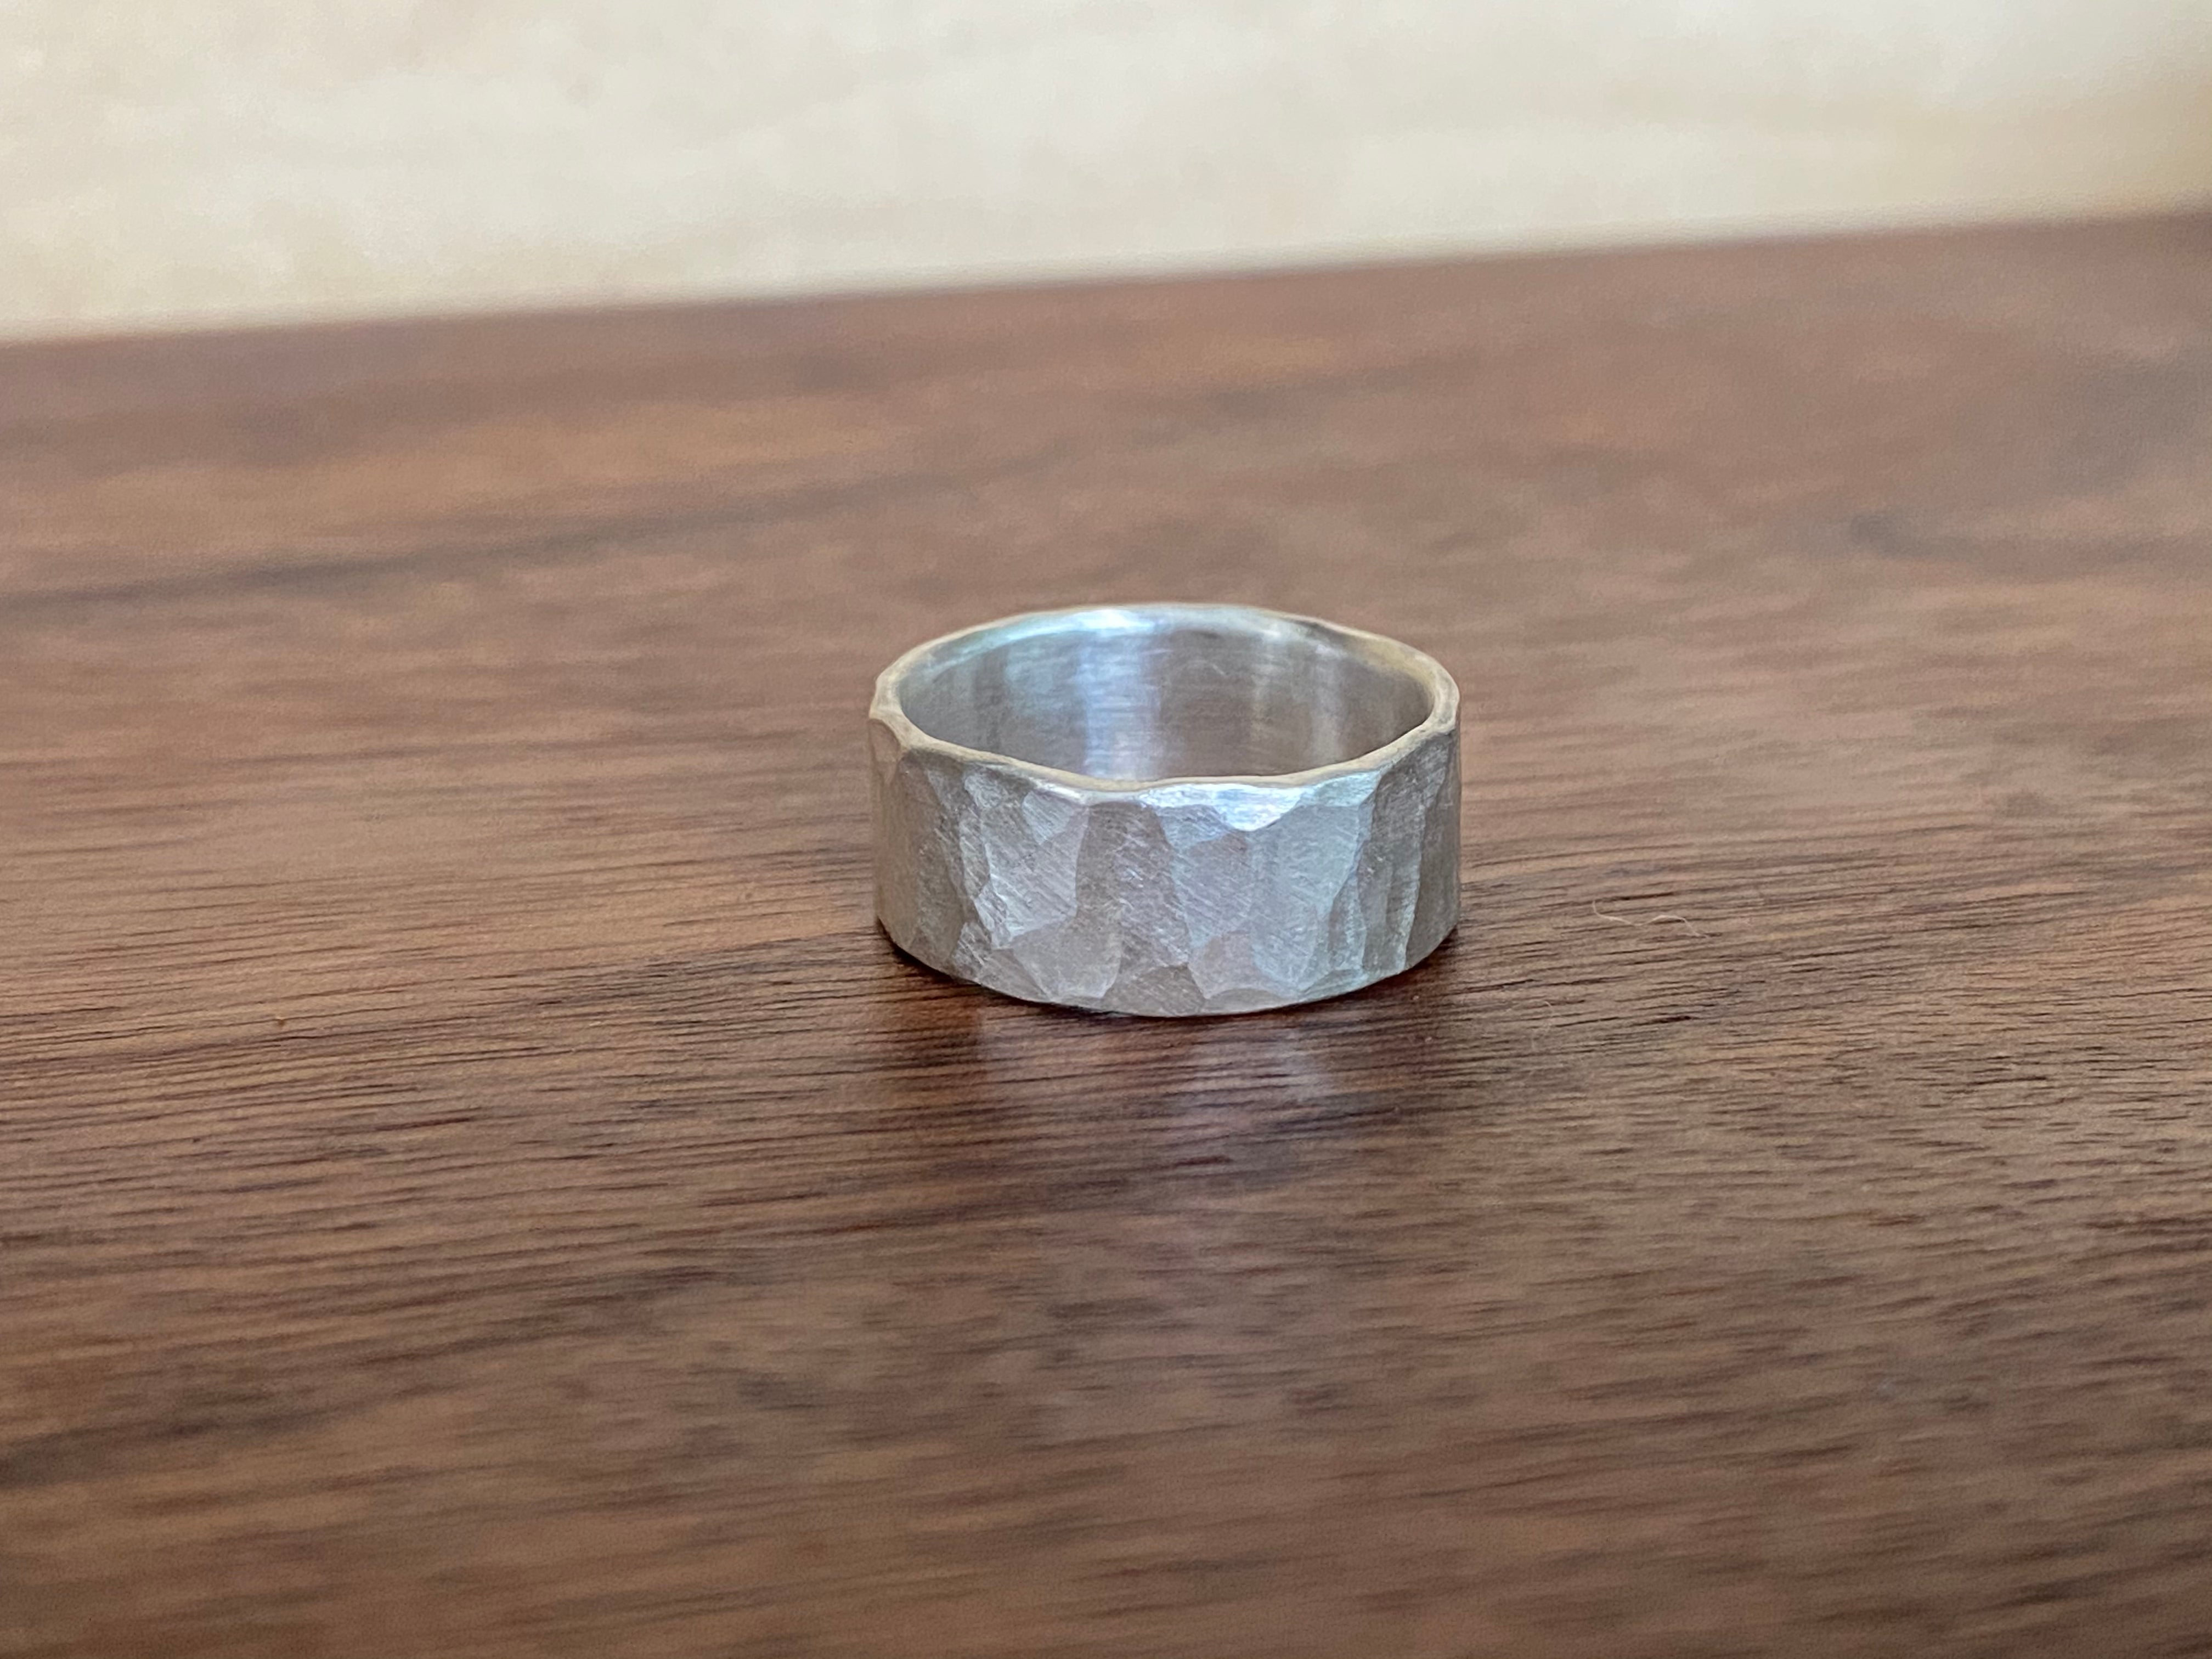 Siedra Loeffler- Hammered Sterling Silver Ring